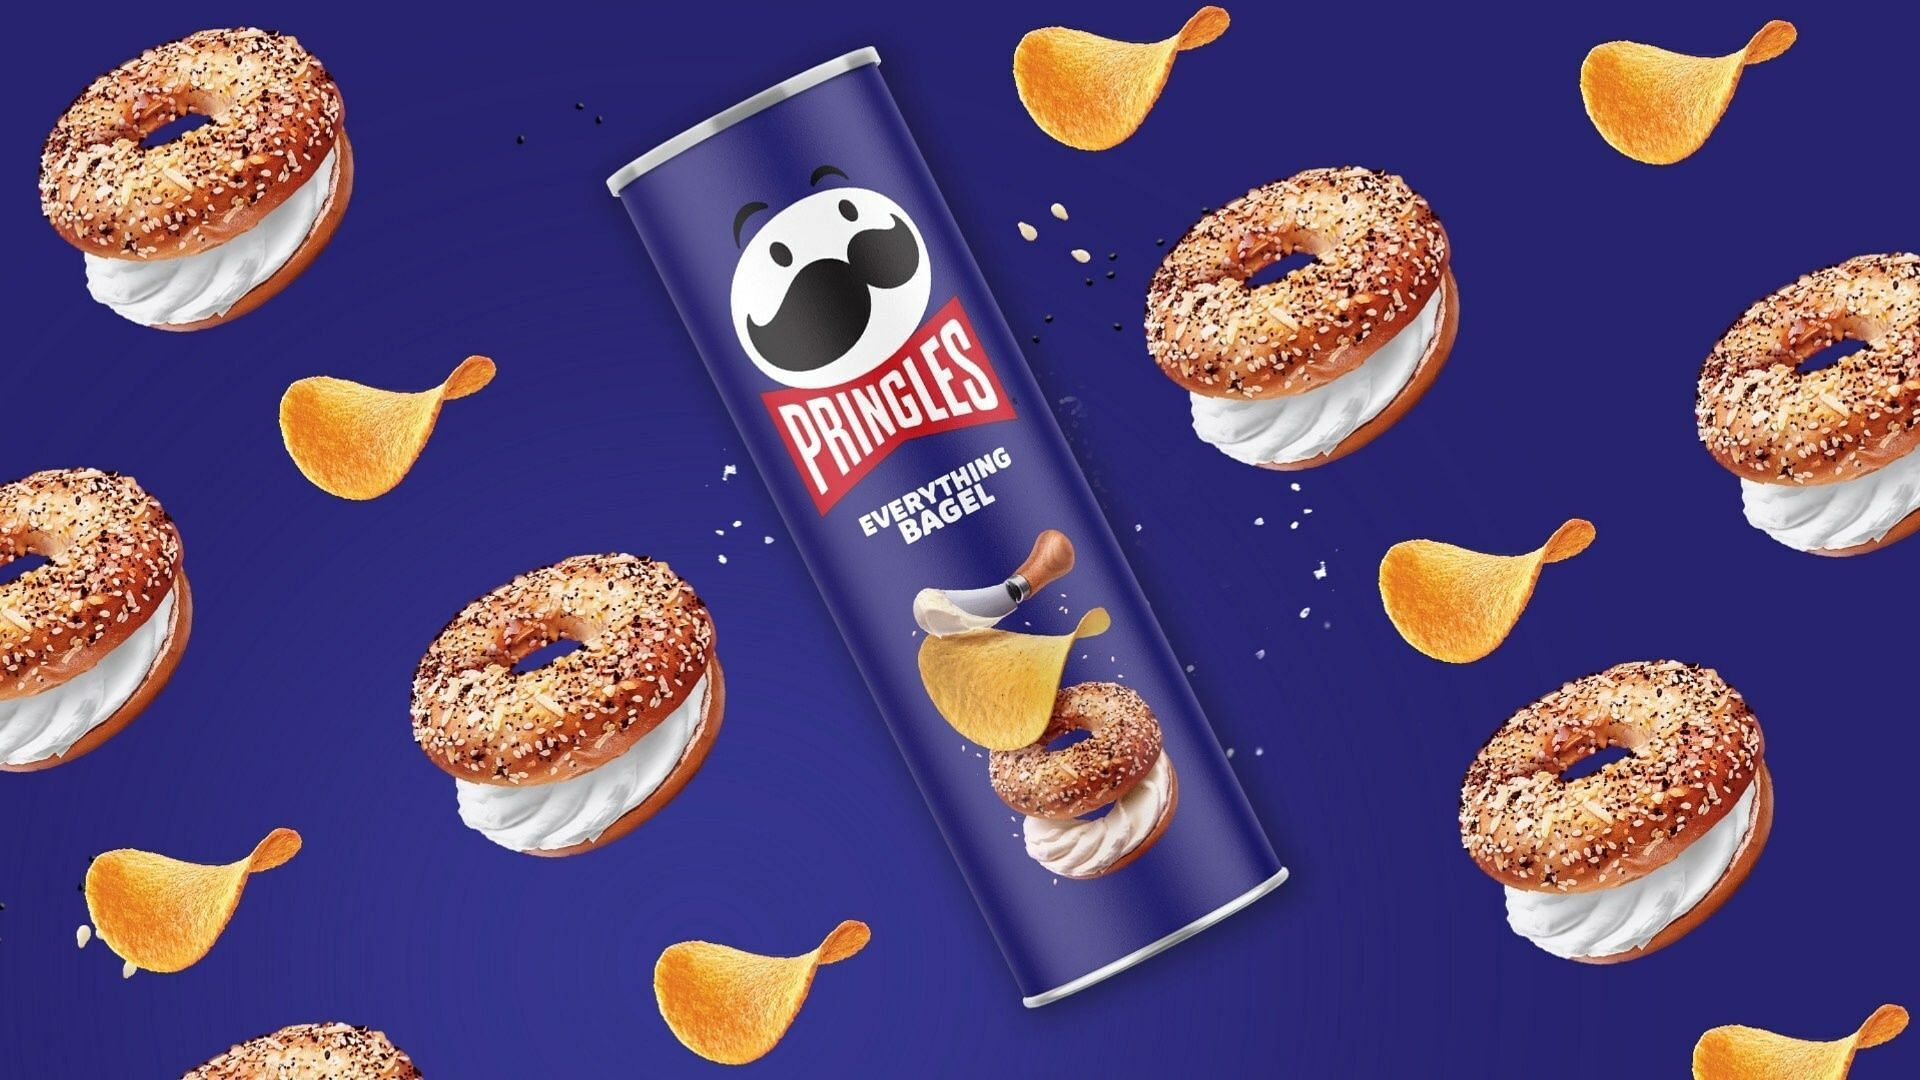 Pringles introduces new &lsquo;Everything Bagel&rsquo; potato crisps (Image via Pringles)